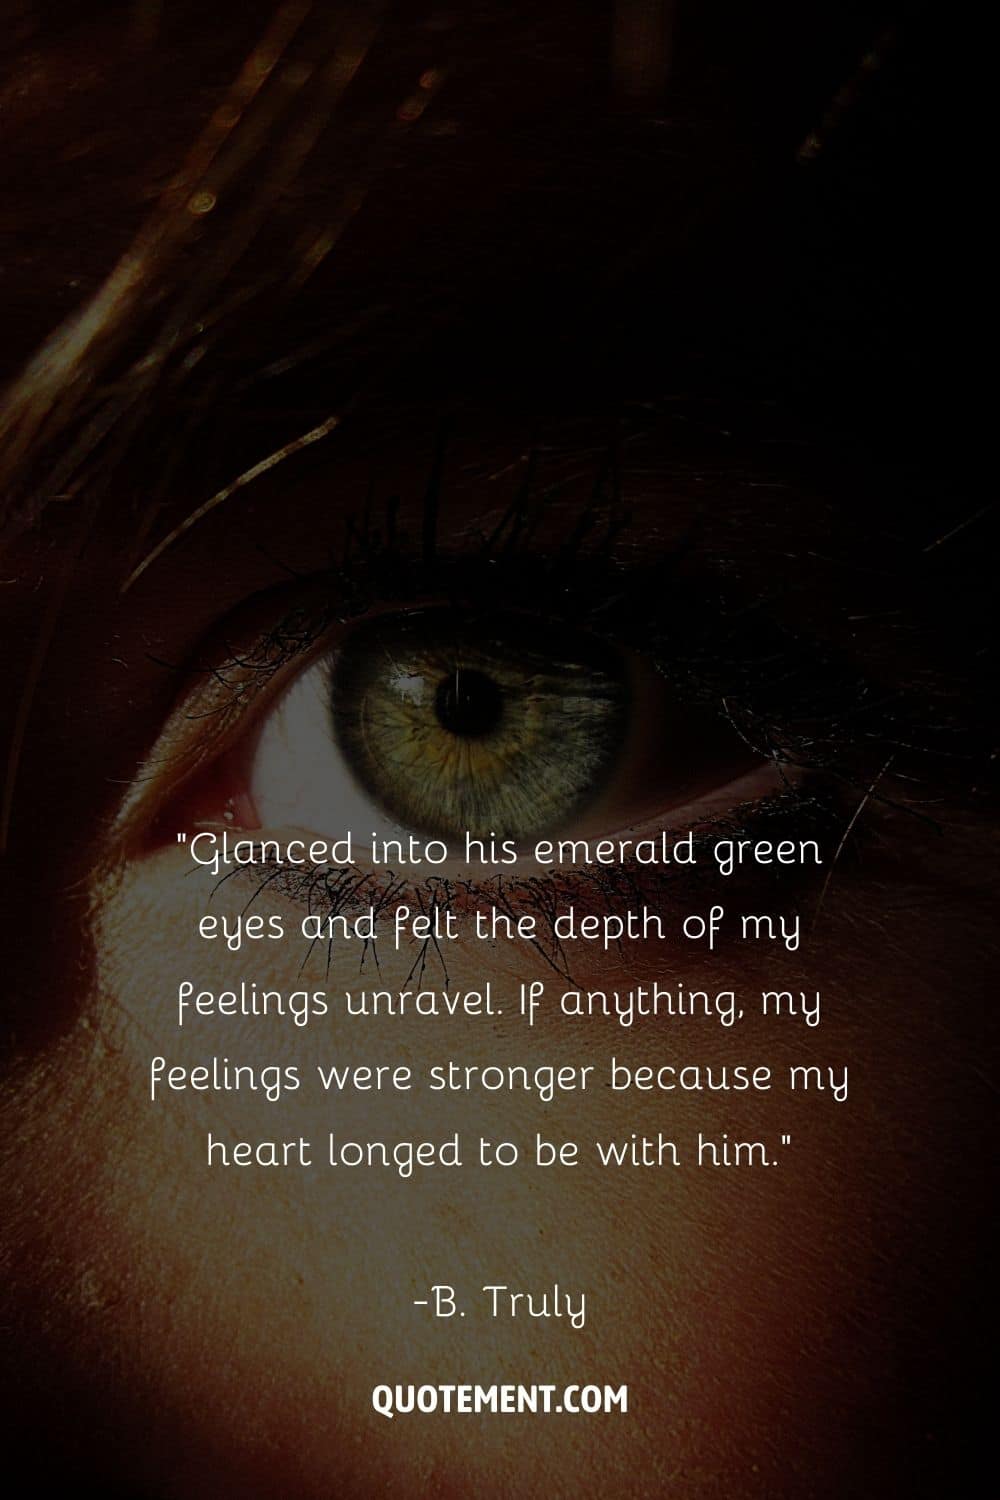 ojo verde de mujer con mascara suave imagen de cerca